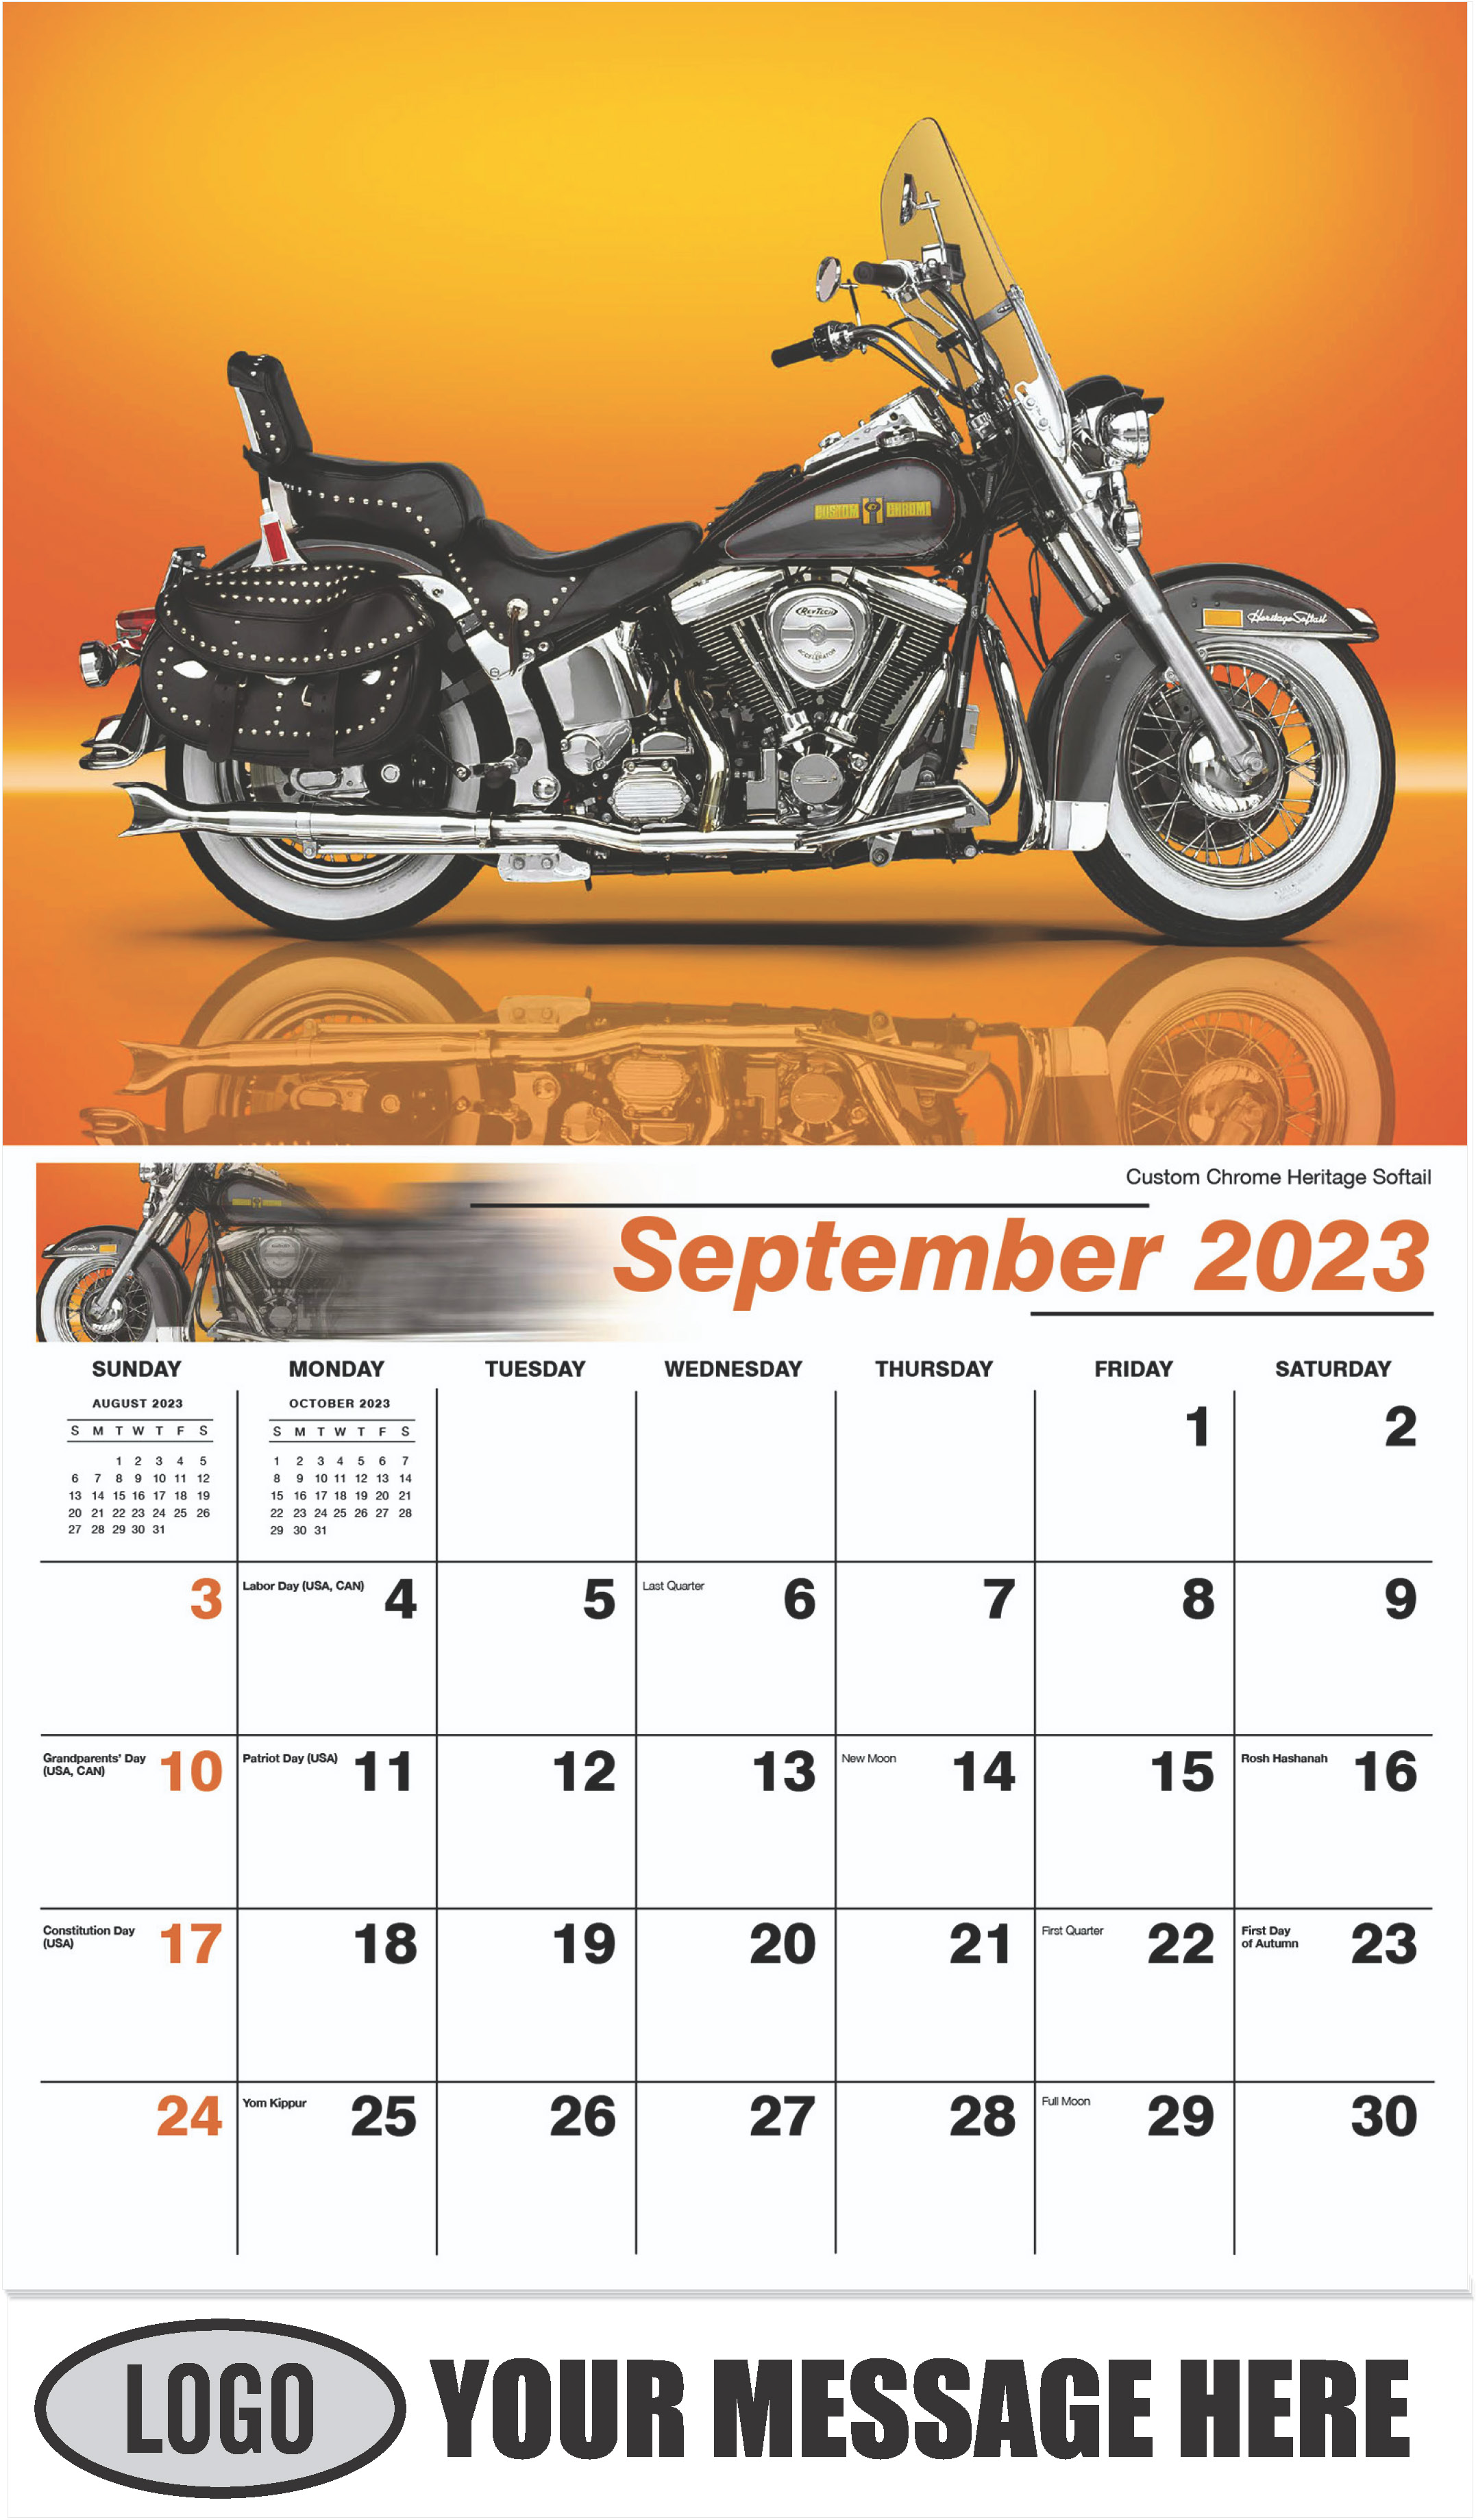 Custom Chrome Heritage Softail - September - Motorcycle Mania 2023 Promotional Calendar